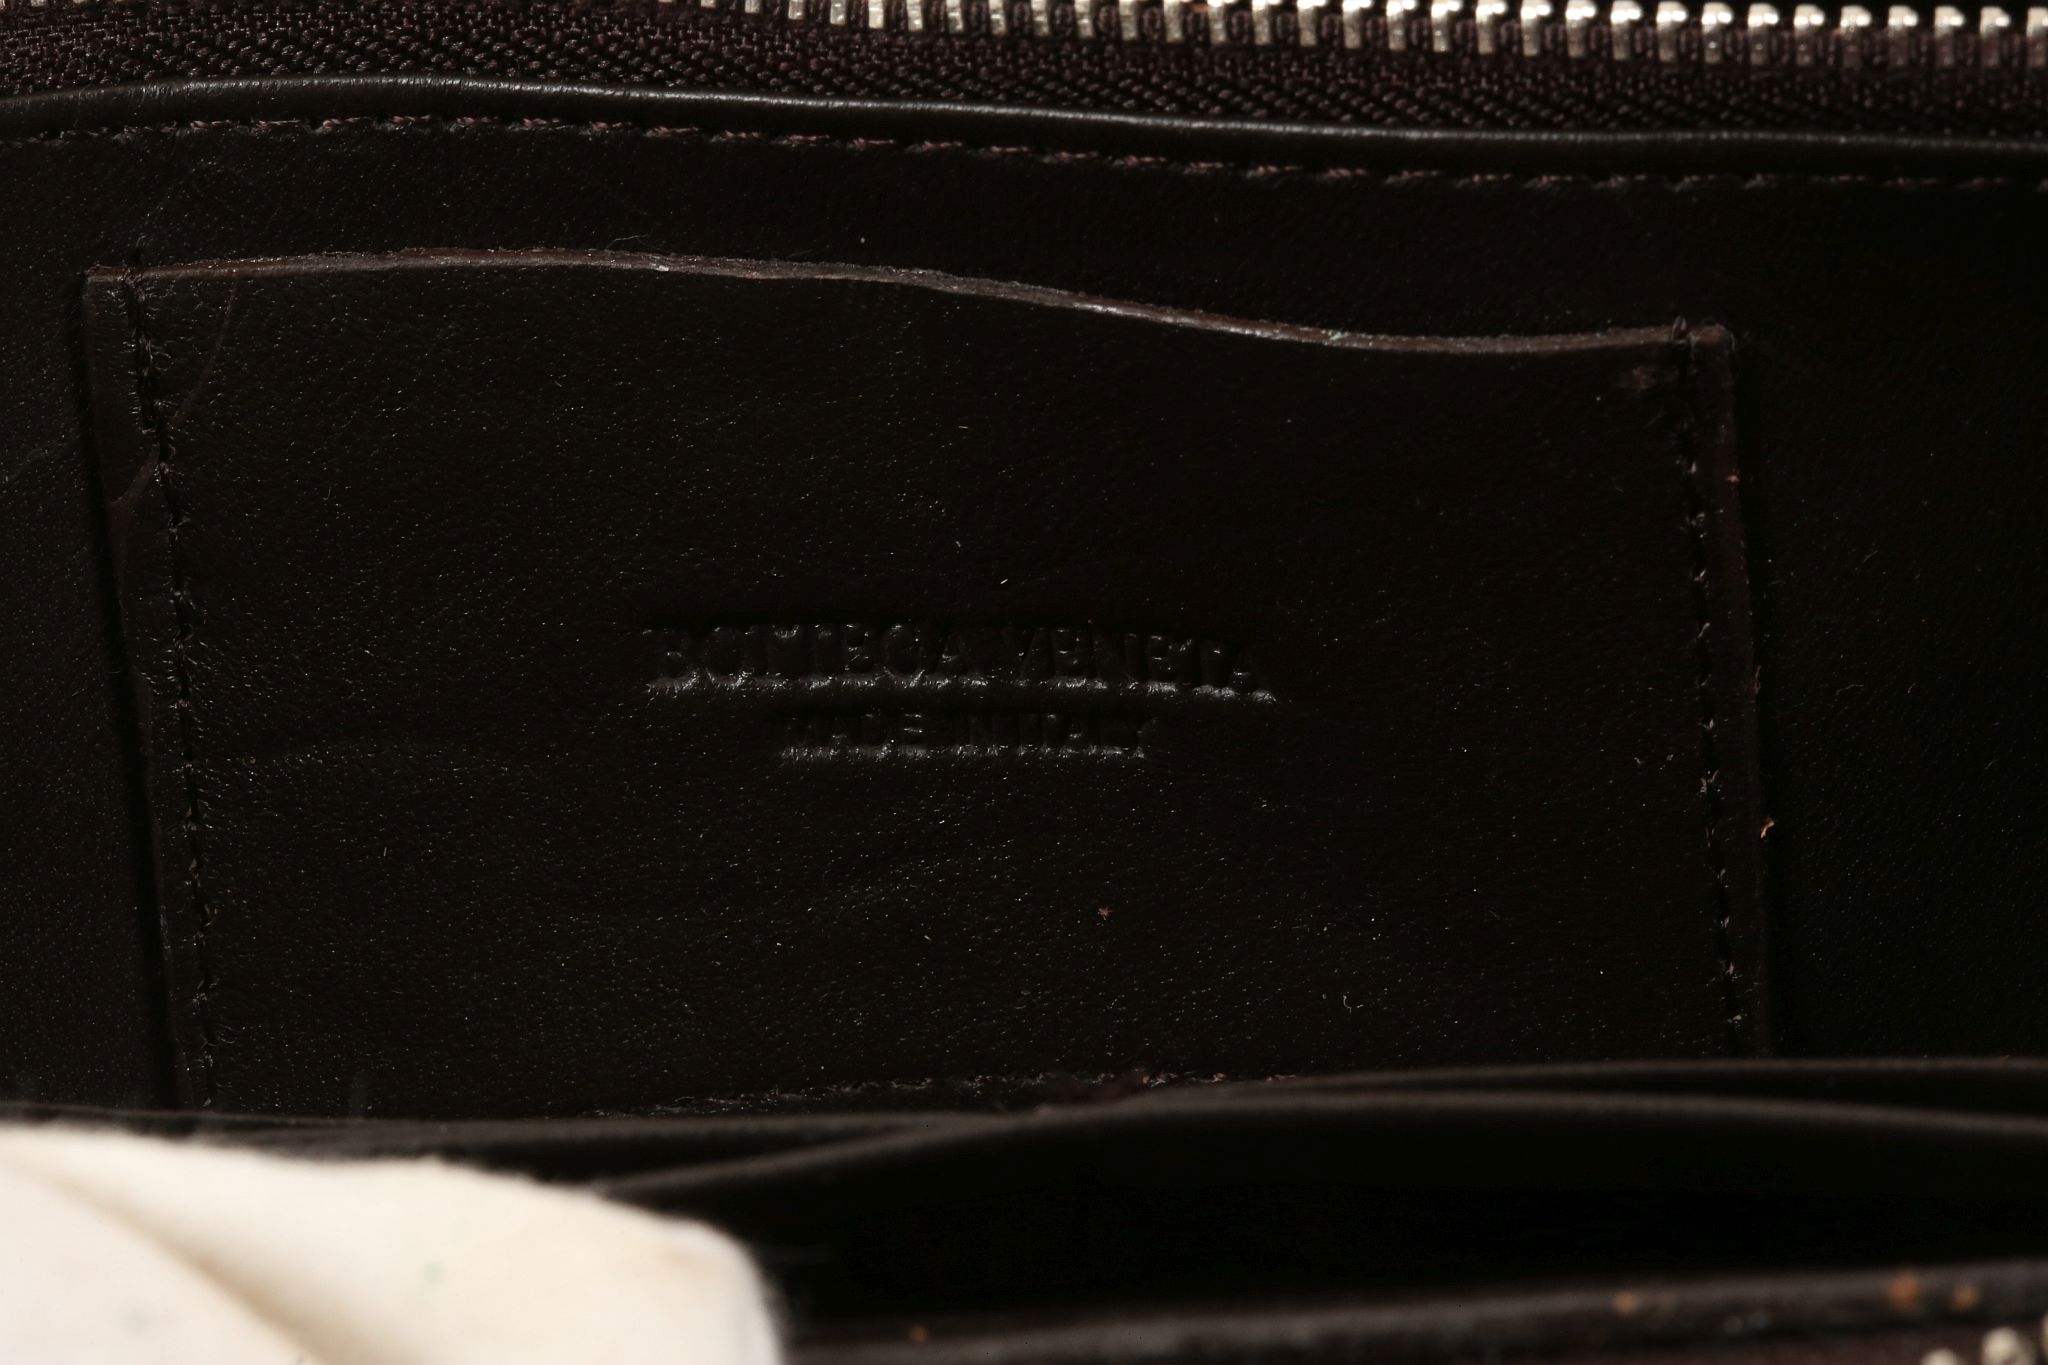 BOTTEGA VENETA PURSE, woven dark brown leather, 20cm wide, 10cm high - Image 5 of 8